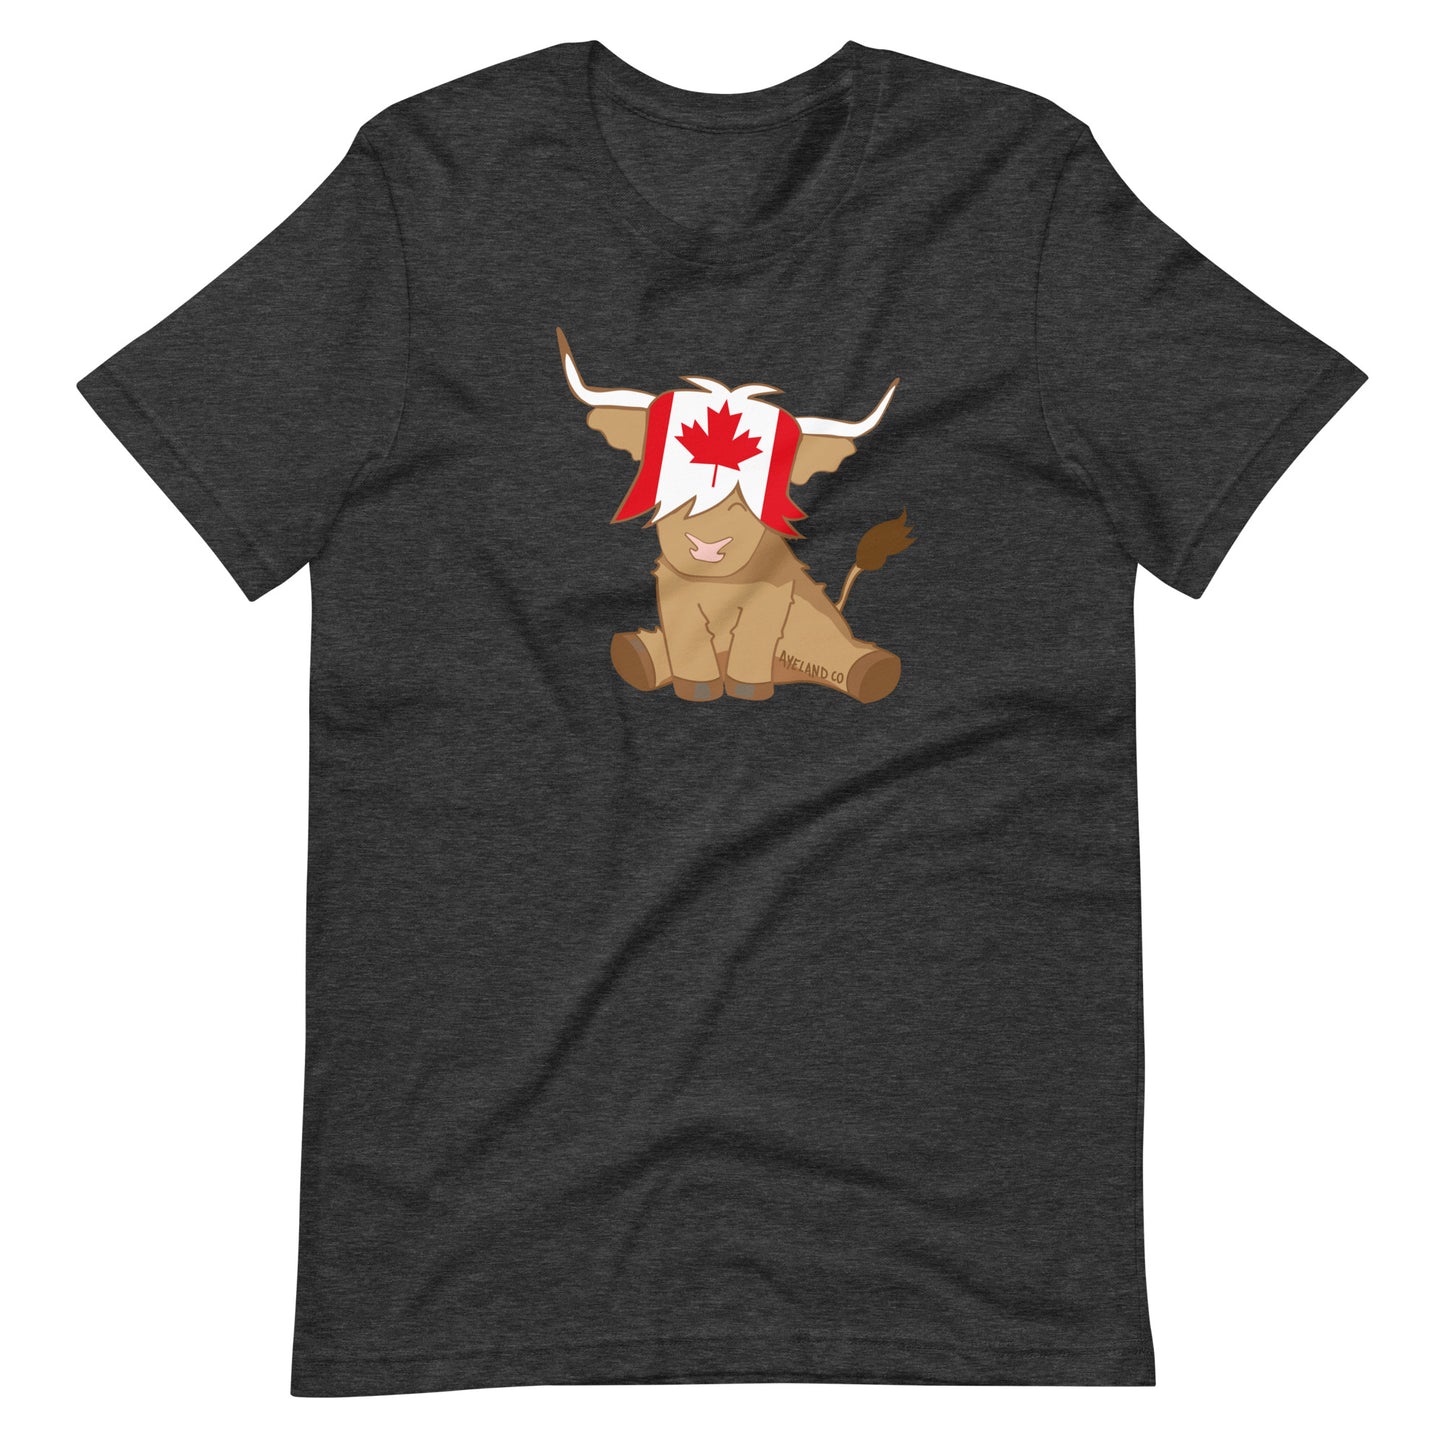 Heather grey tshirt with a canadian flag highland cow